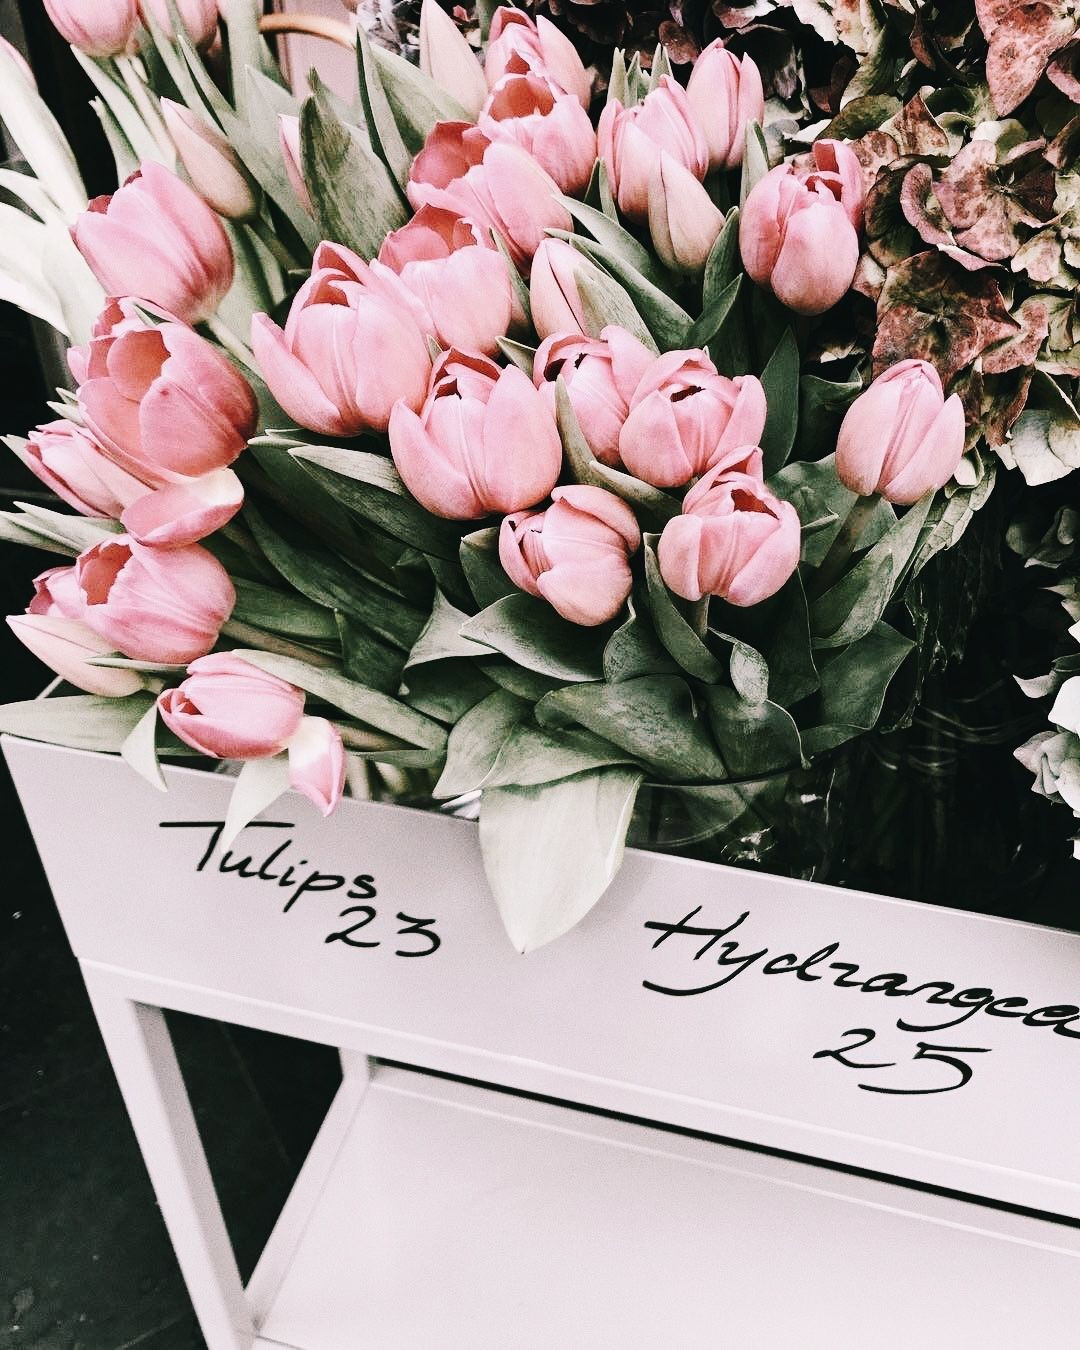 15 Stylish White Tulips In Glass Vase 2024 free download white tulips in glass vase of ac299c295 insta and pinterest amymckeown5 flower child pinterest pertaining to insta and pinterest amymckeown5